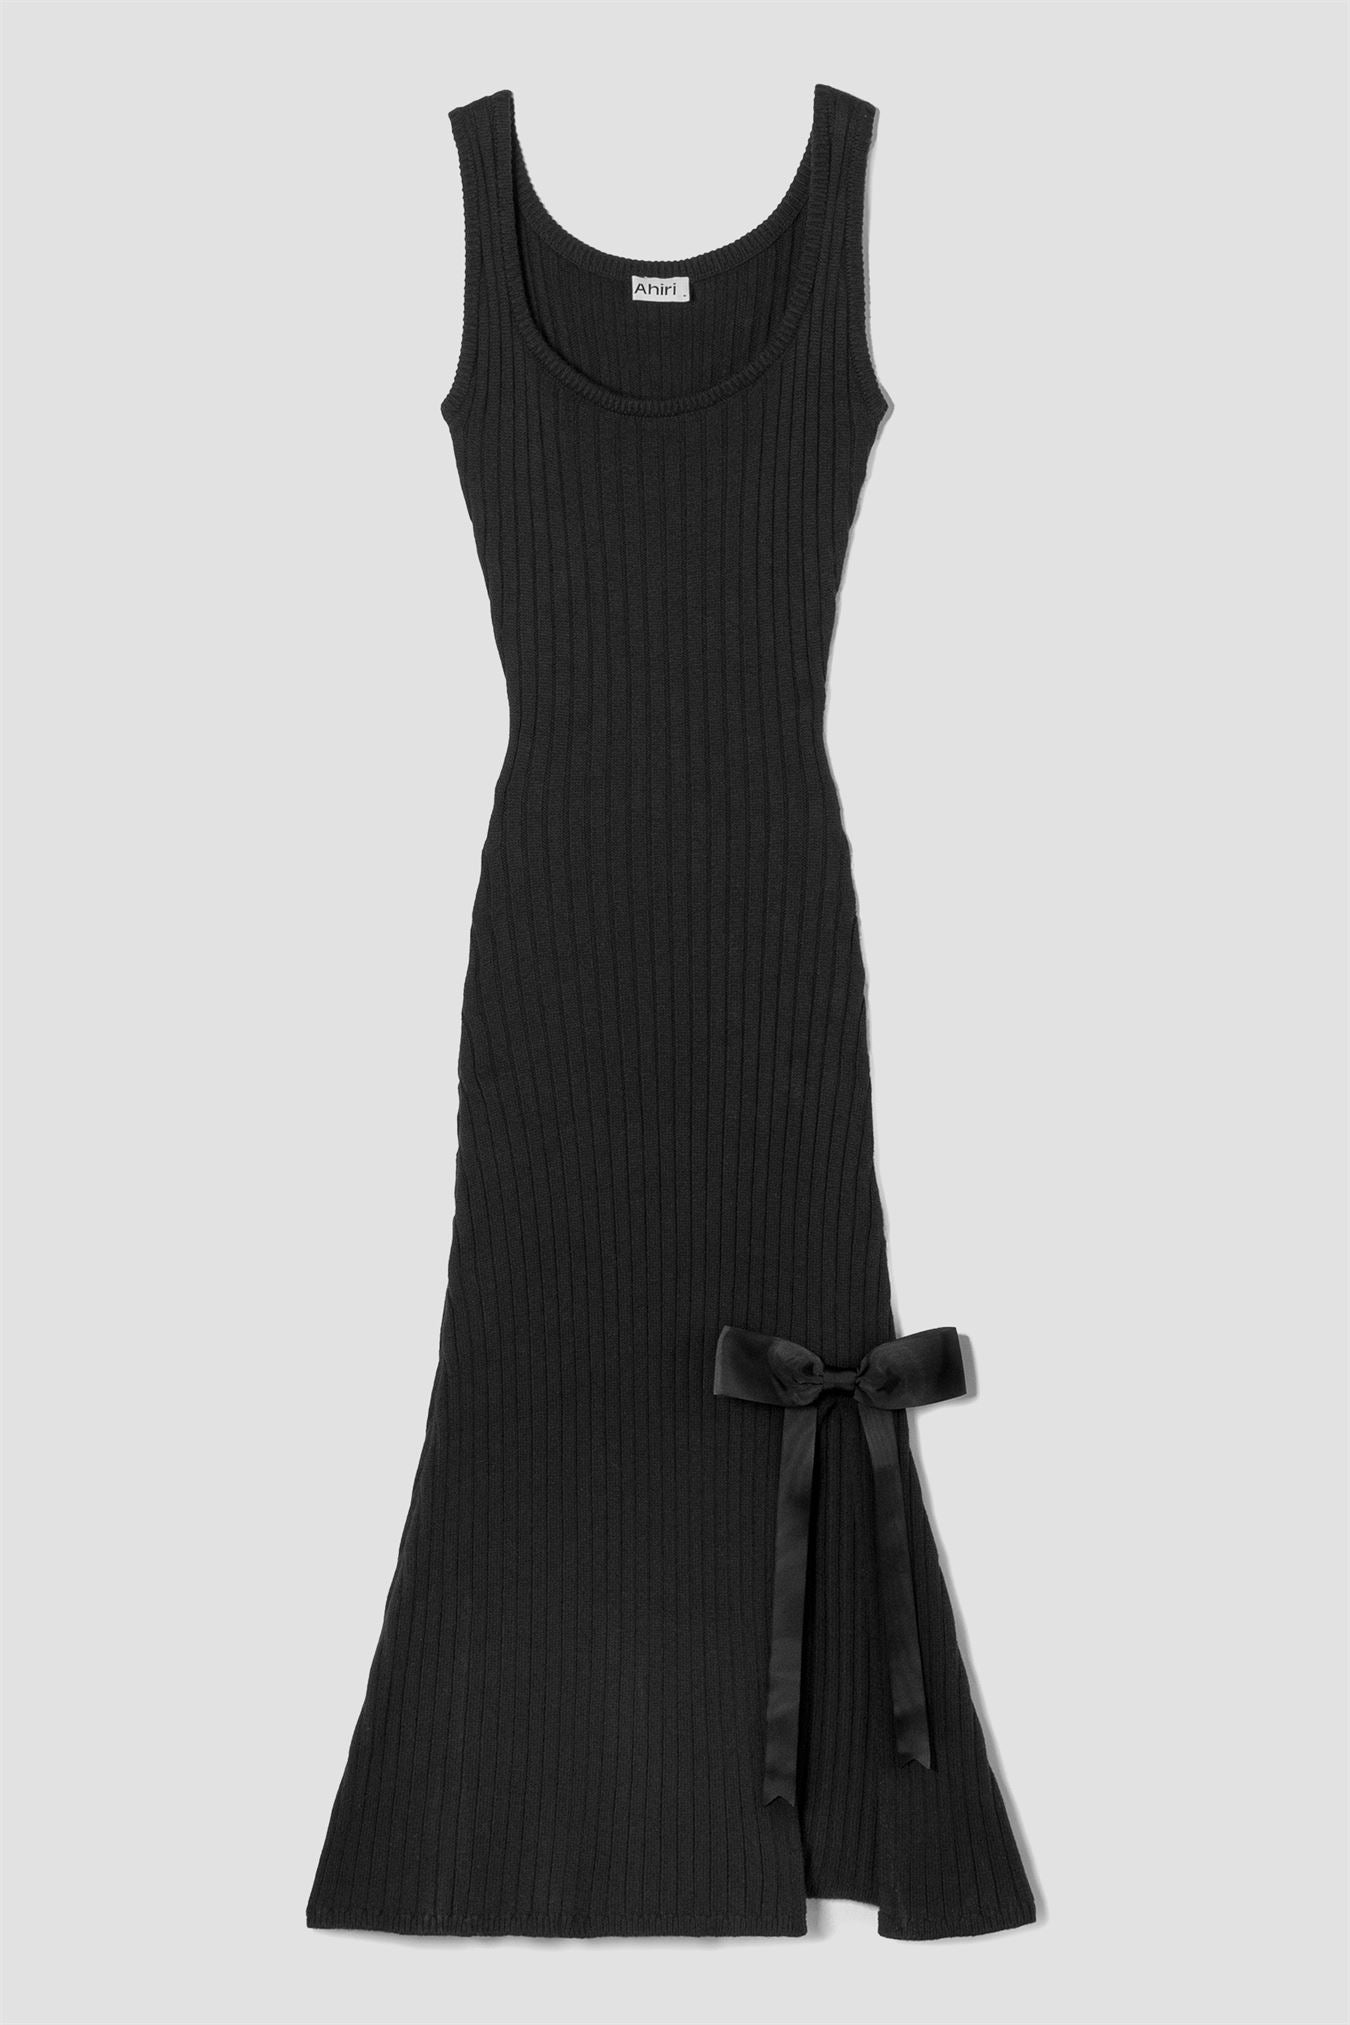 Black Flare Knit Dress, WHISTLES